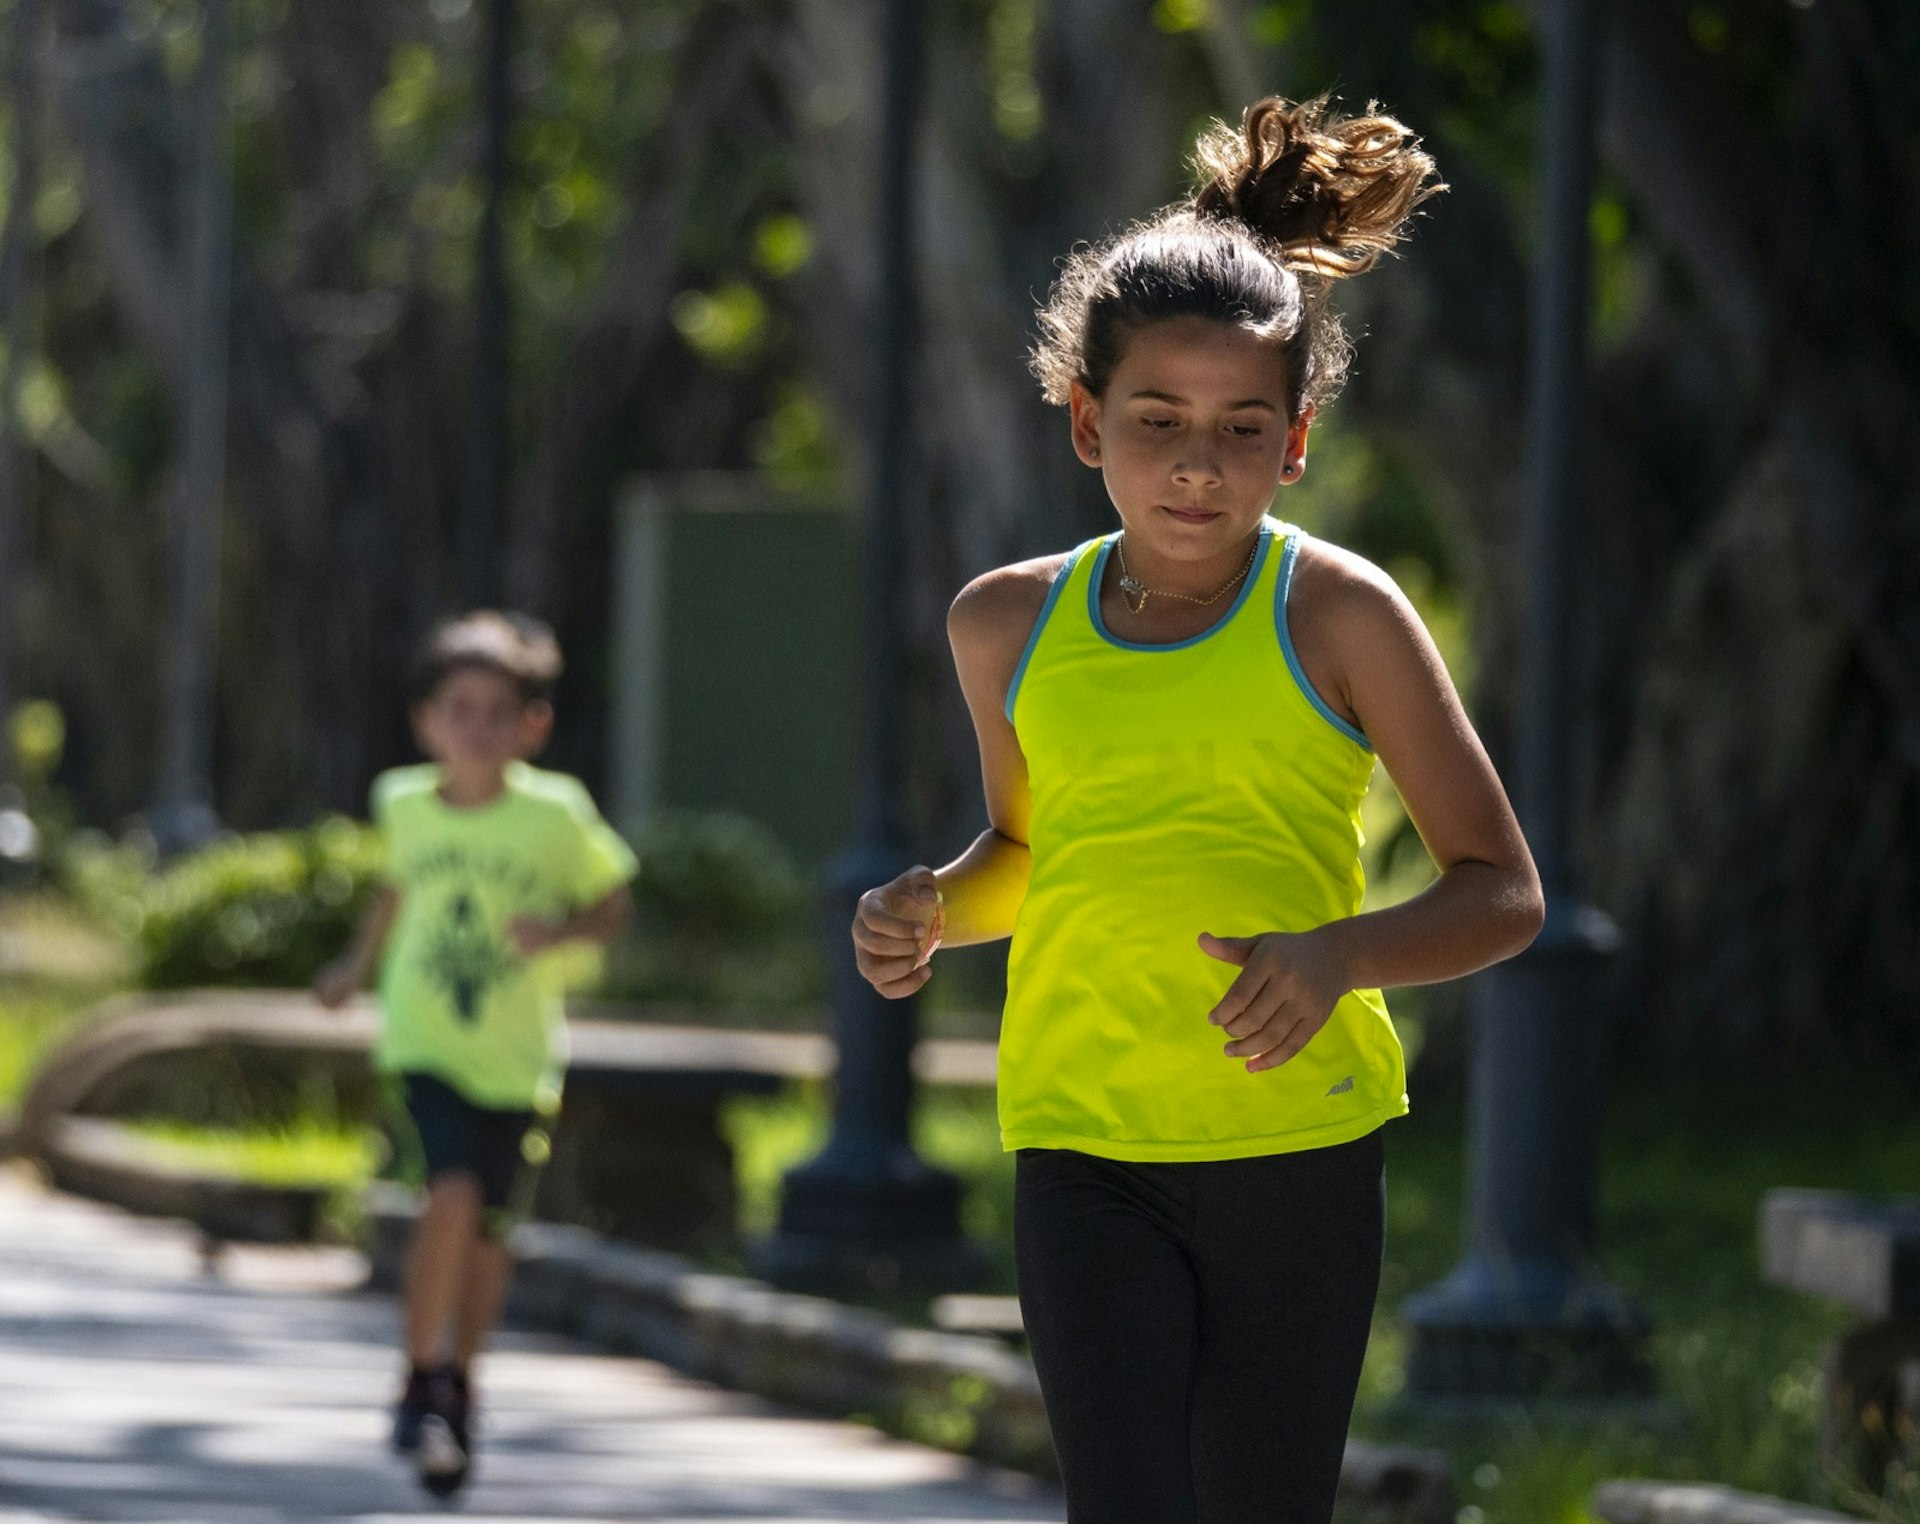 Children run a race at Luis Muñoz Rivera Park in Old San Juan, Puerto Rico © Al Bello/Getty Images for Lumix